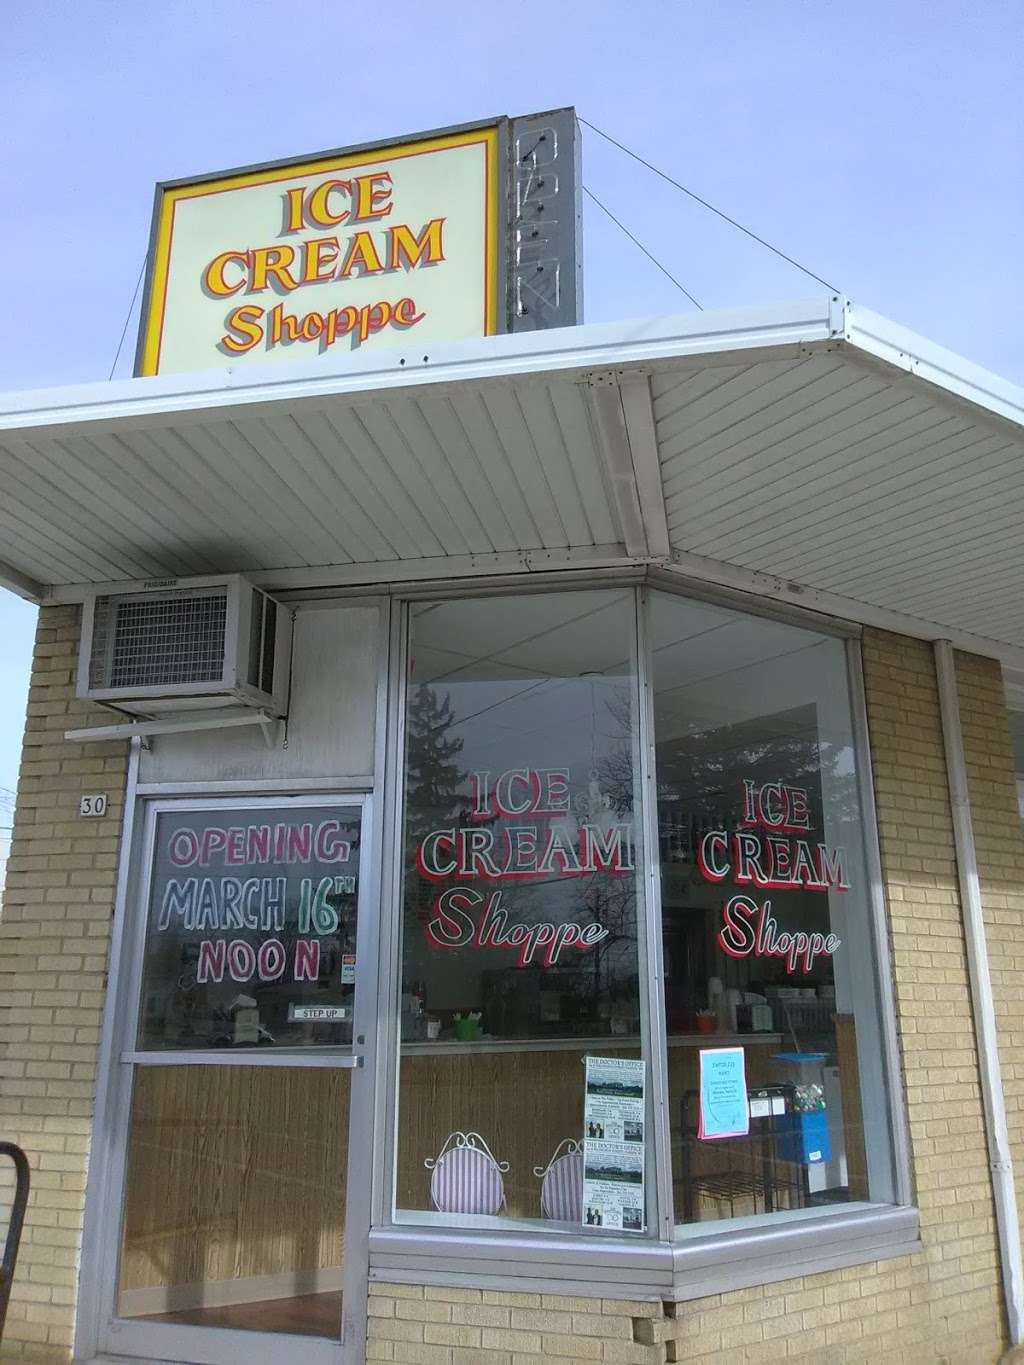 Darien Ice Cream Shoppe | 30 W Beloit St, Darien, WI 53114, USA | Phone: (262) 882-5060